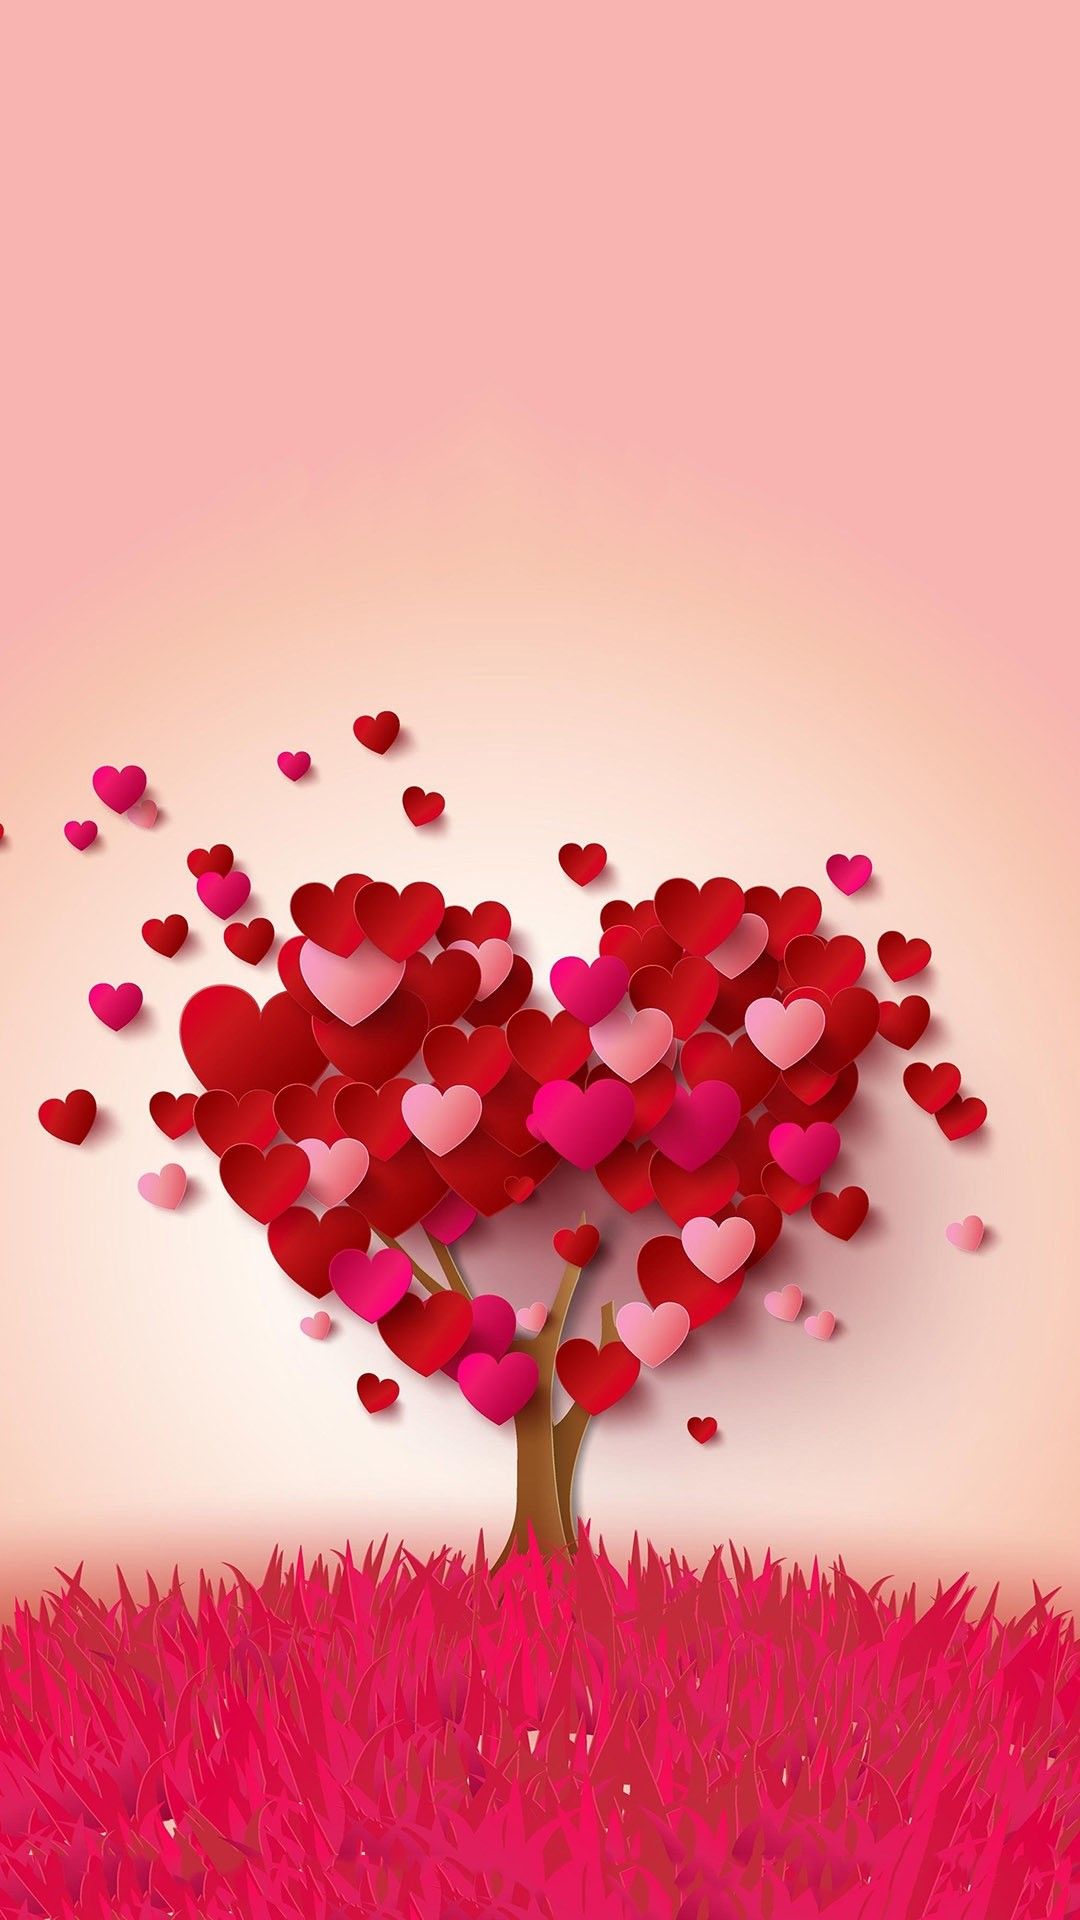 Love Valentine Wallpaper Android Kecbiokecbio.com